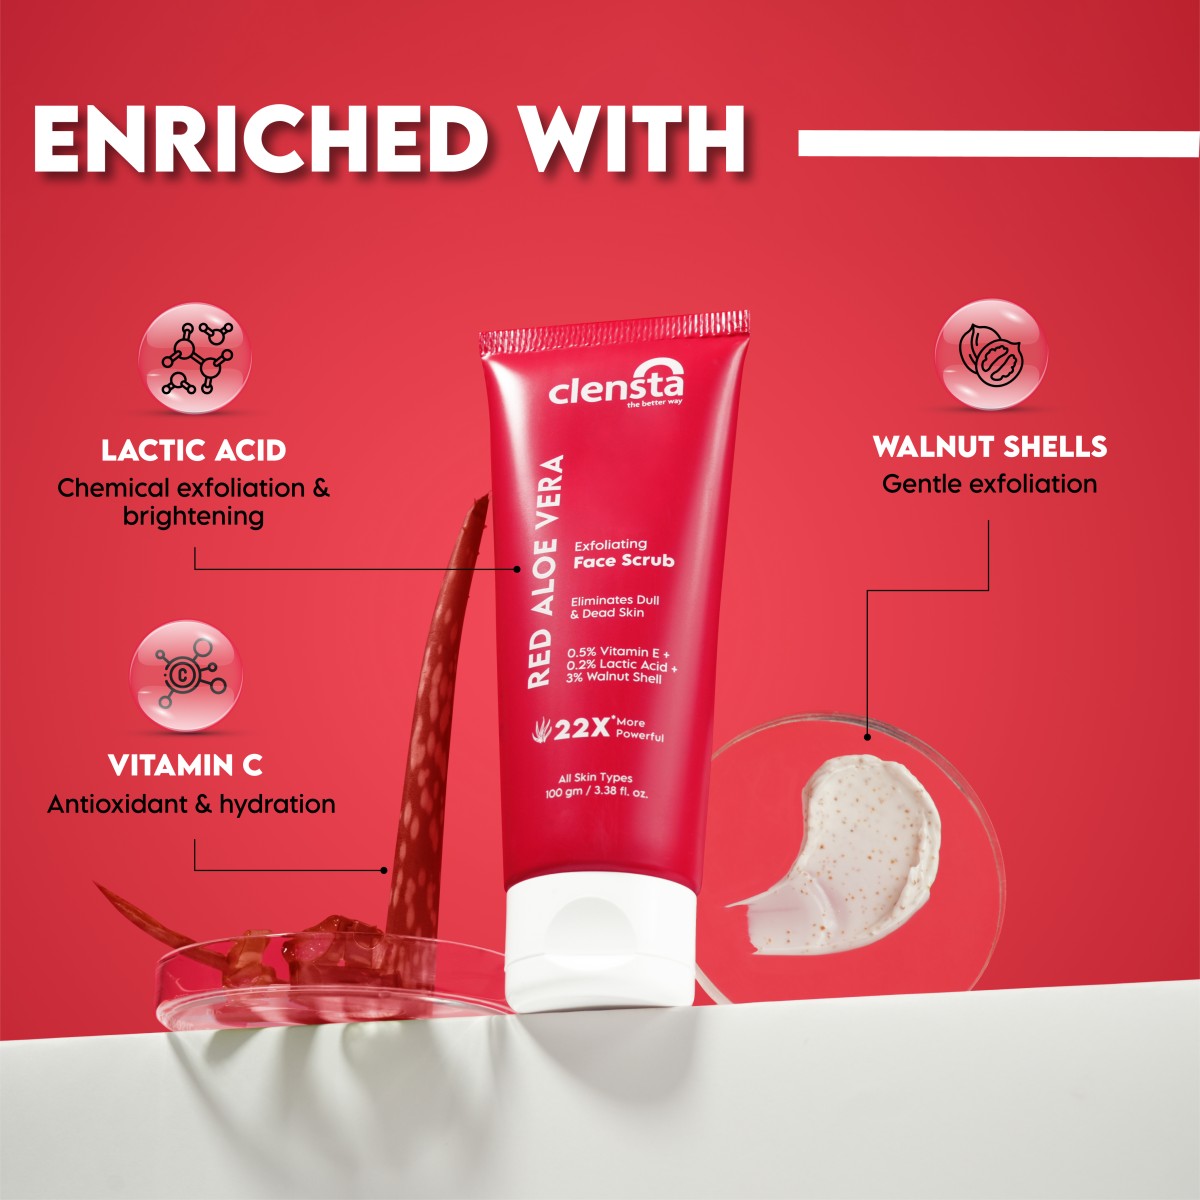 Exfoliating Face Scrub With 3% Walnut Shells, 0.5% Vitamin E & 0.2% Lactic Acid For Eliminating Dull & Dead Skin